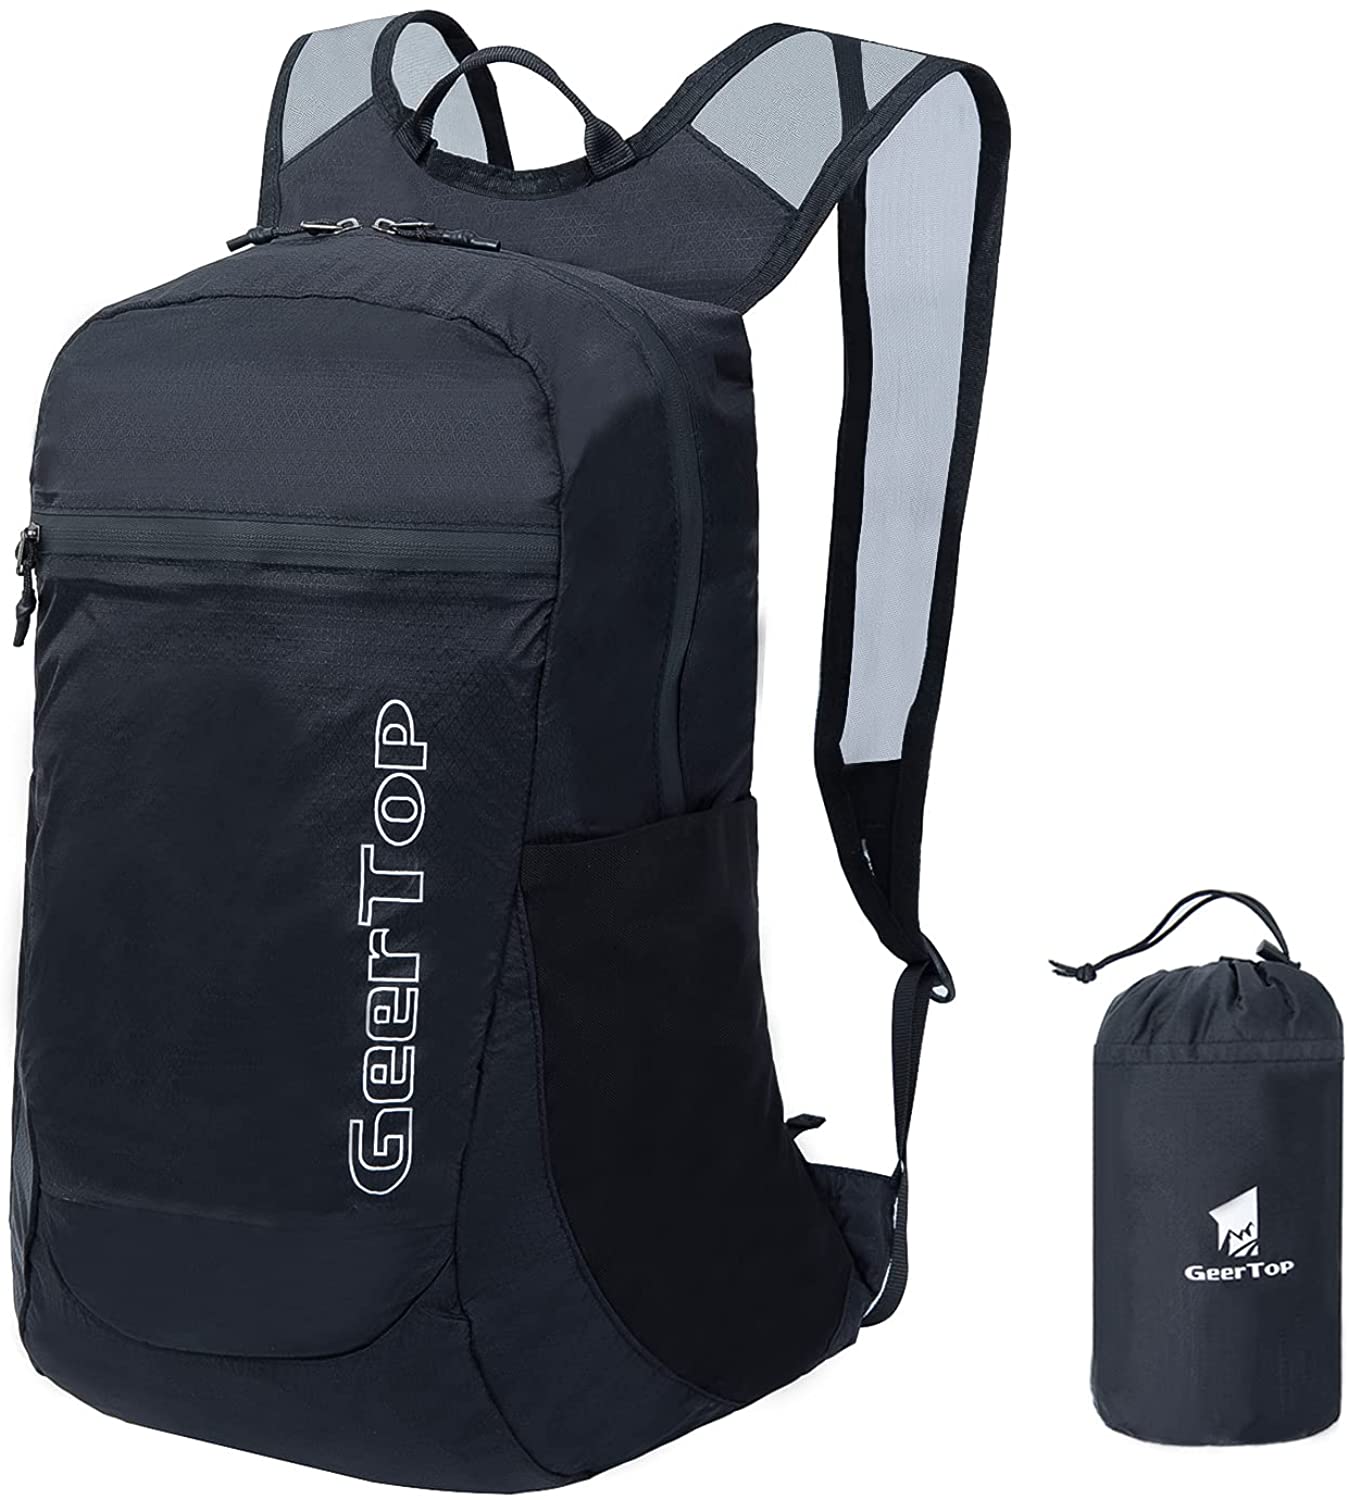 GeerTop Outdoor Store backpack black Backpack water ultra light portable folding